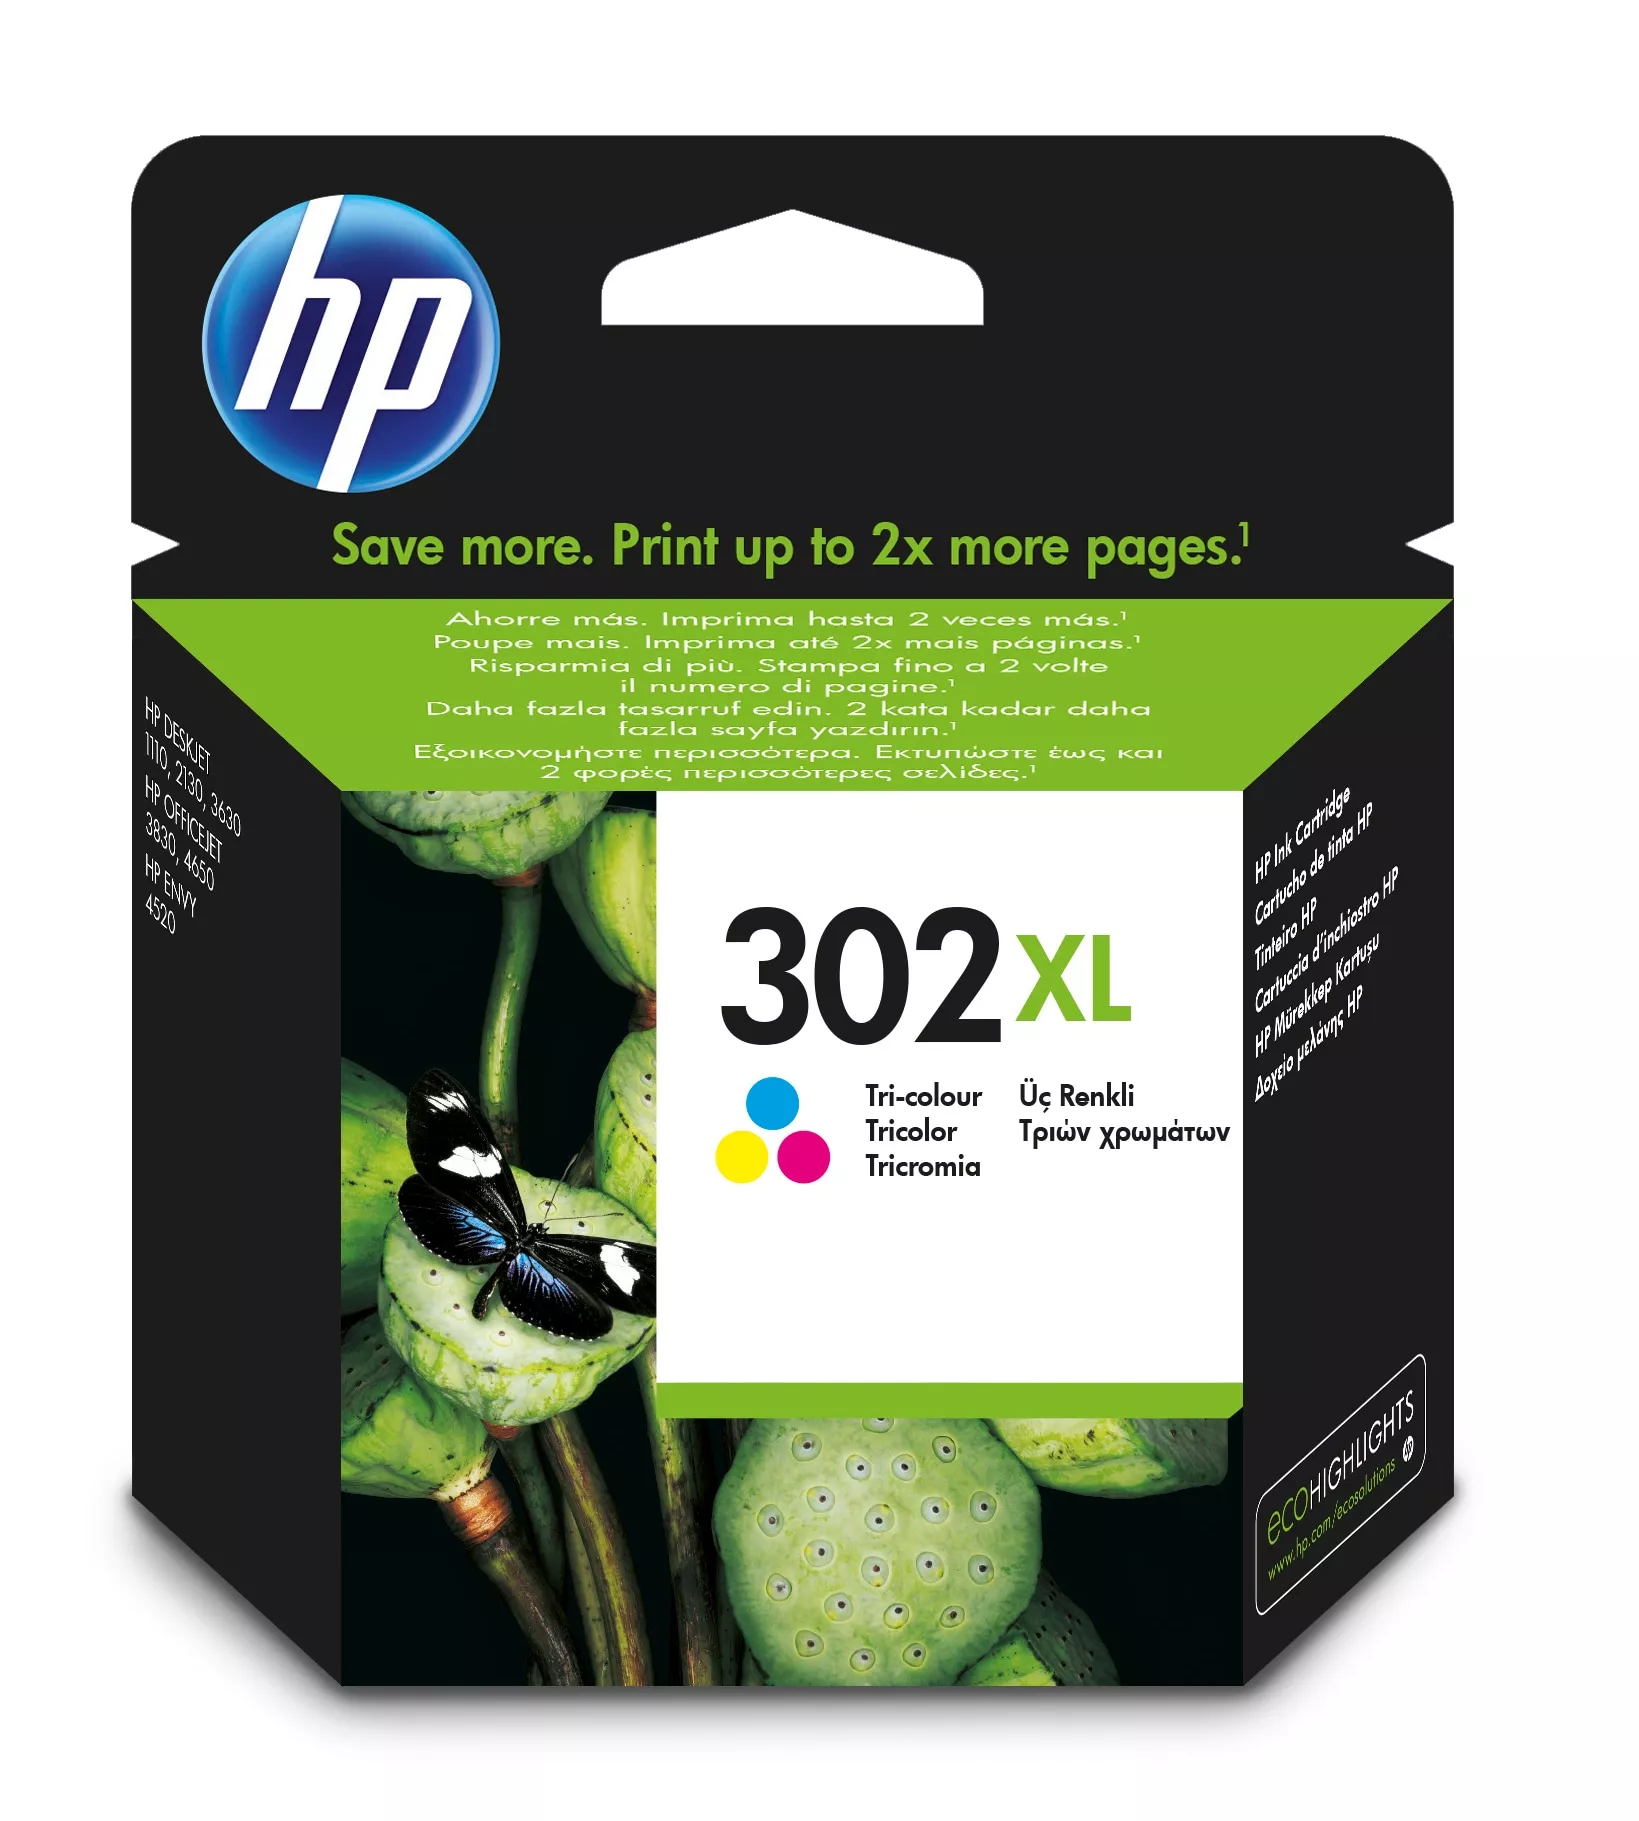 Revendeur officiel HP 302XL original Tri-color Ink cartridge F6U67AE 301 Blister